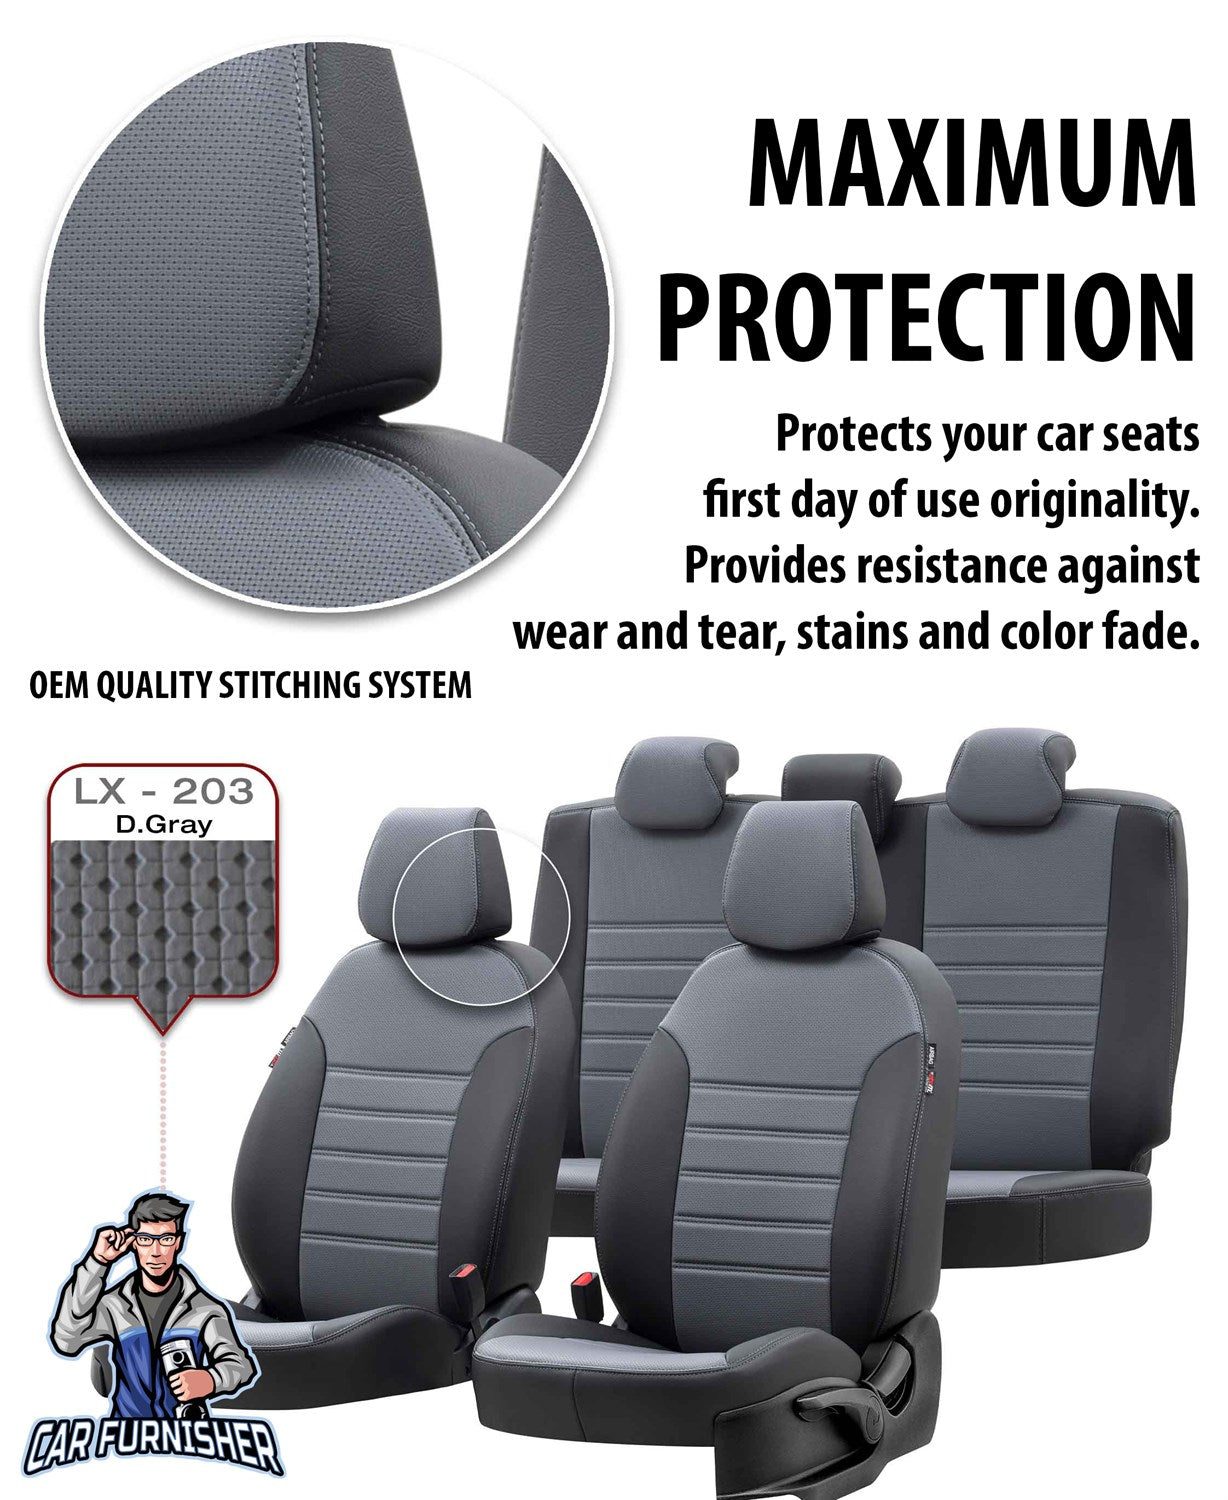 Nissan Interstar Seat Cover Milano Suede Design Beige Leather